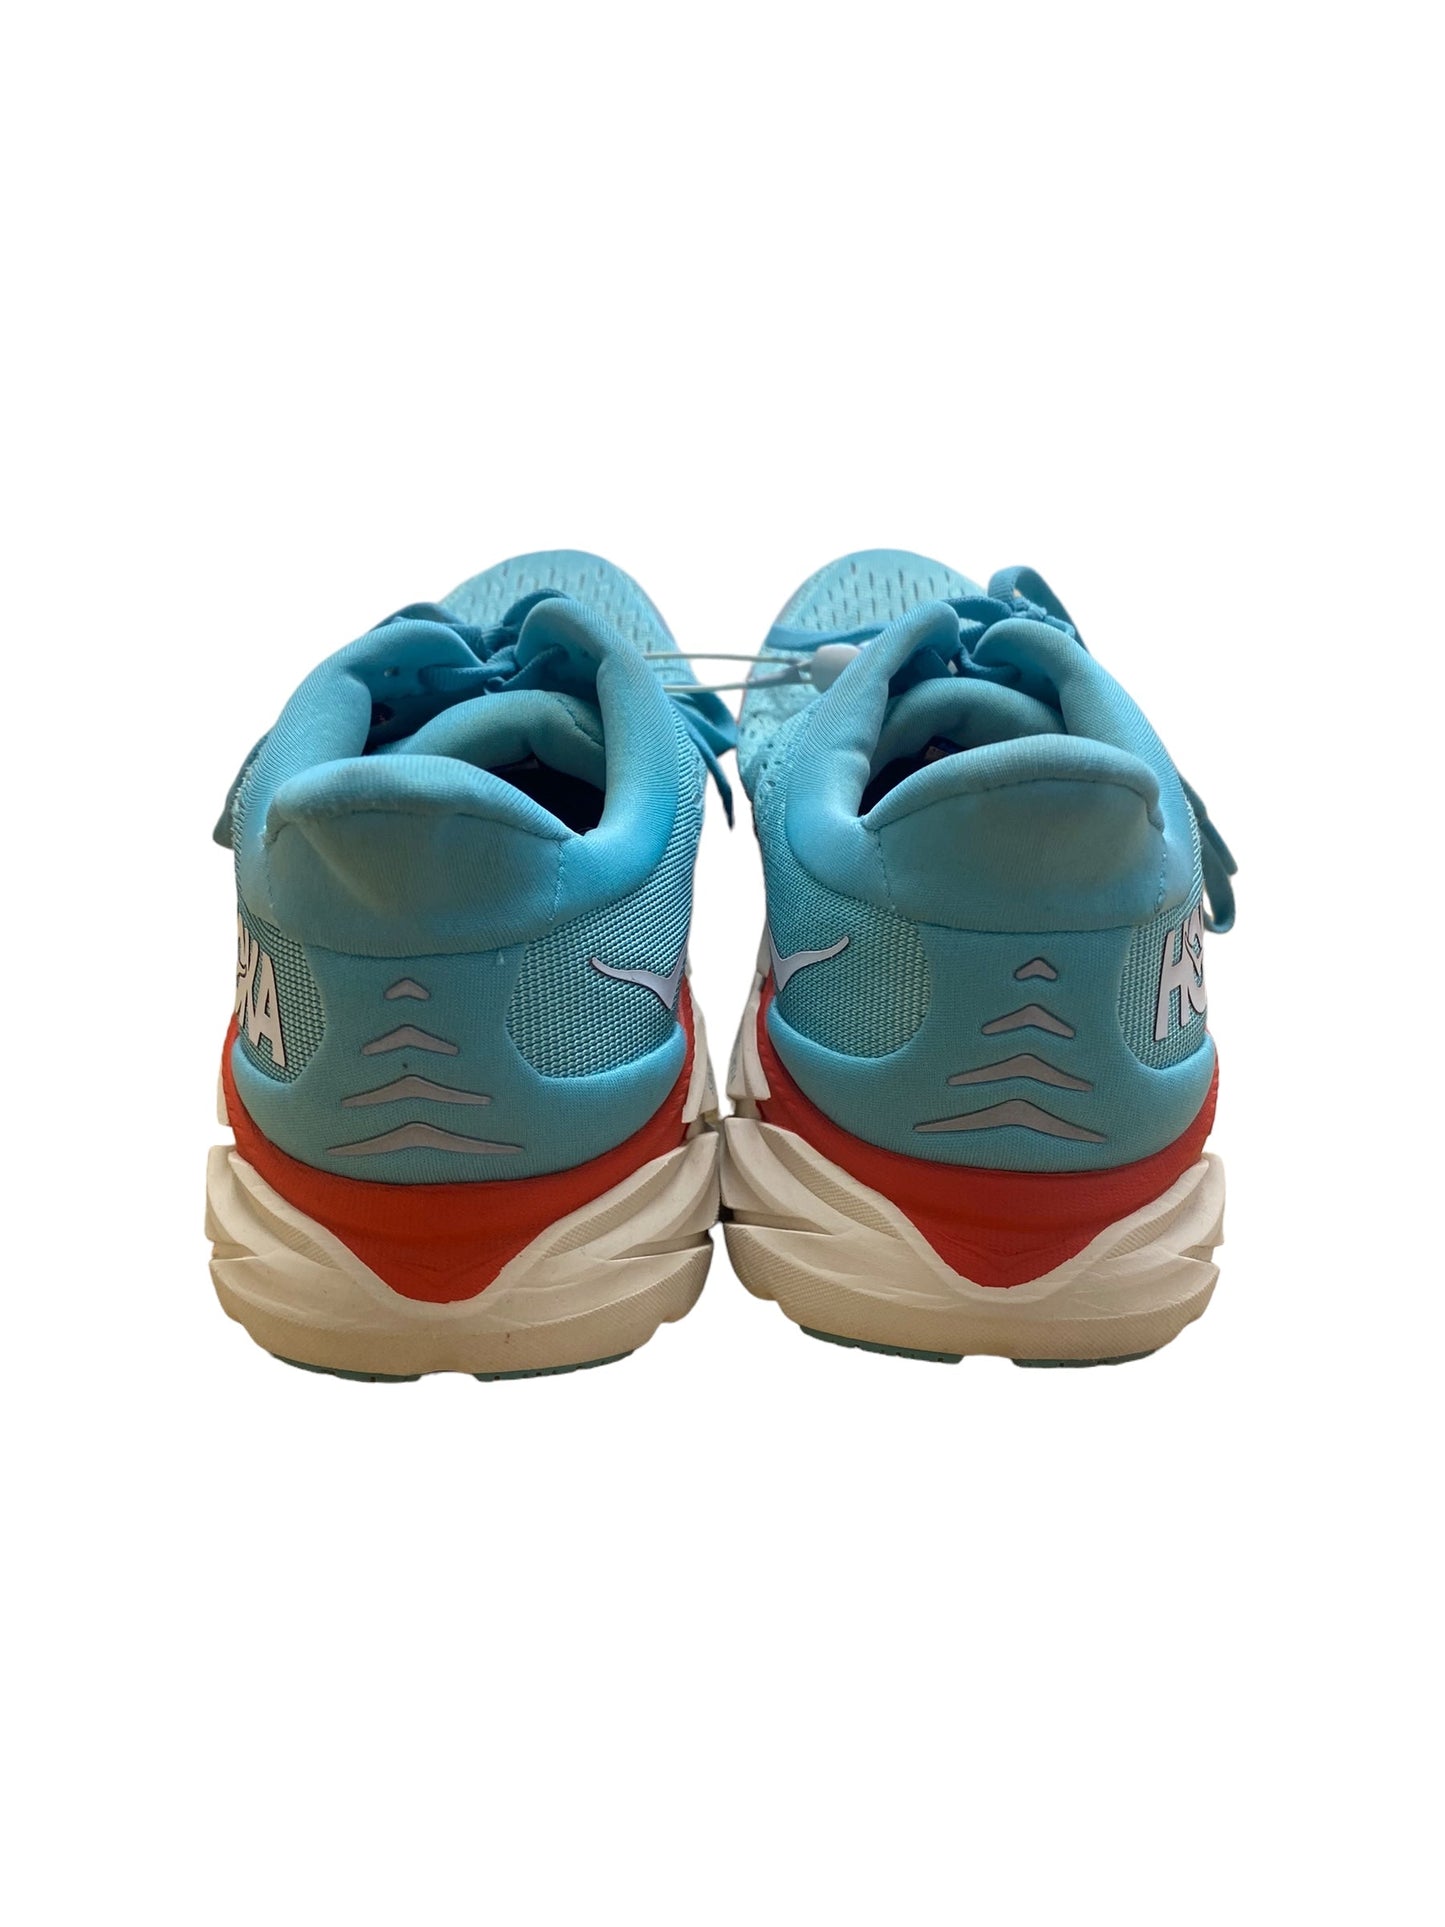 Teal Shoes Athletic Hoka, Size 9.5